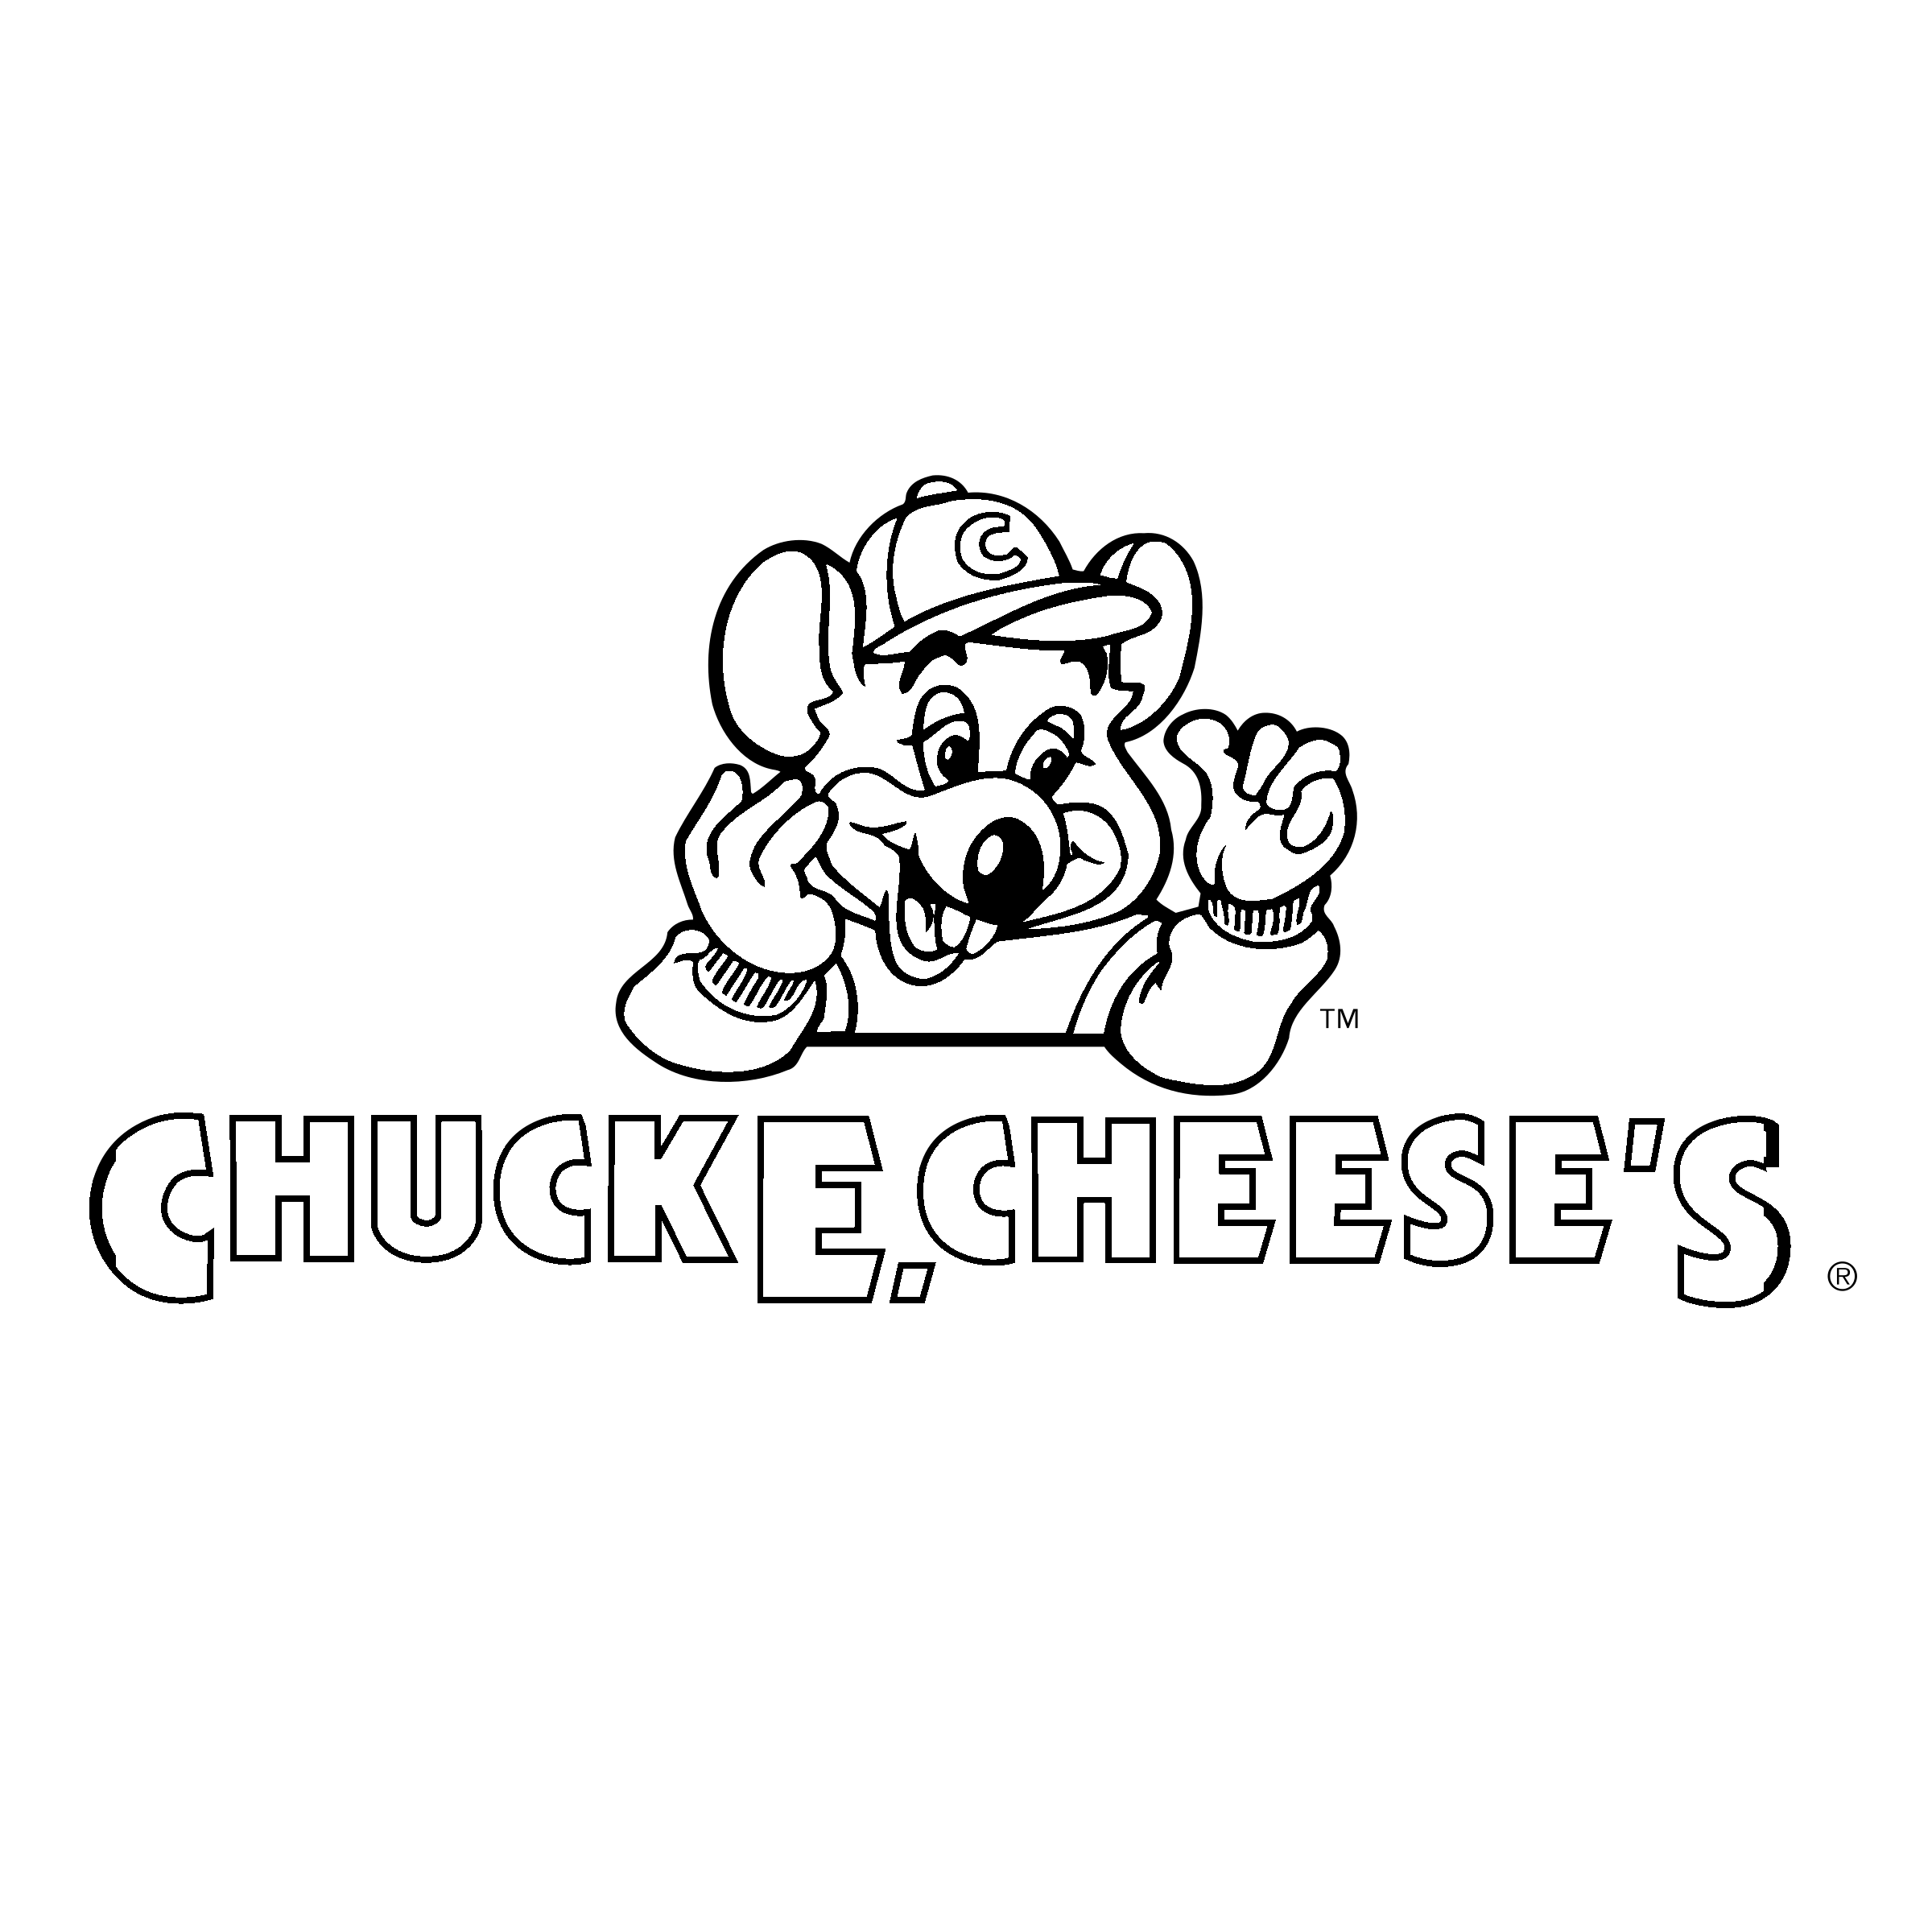 Cheese White Logo - Chuck E Cheese's Logo PNG Transparent & SVG Vector